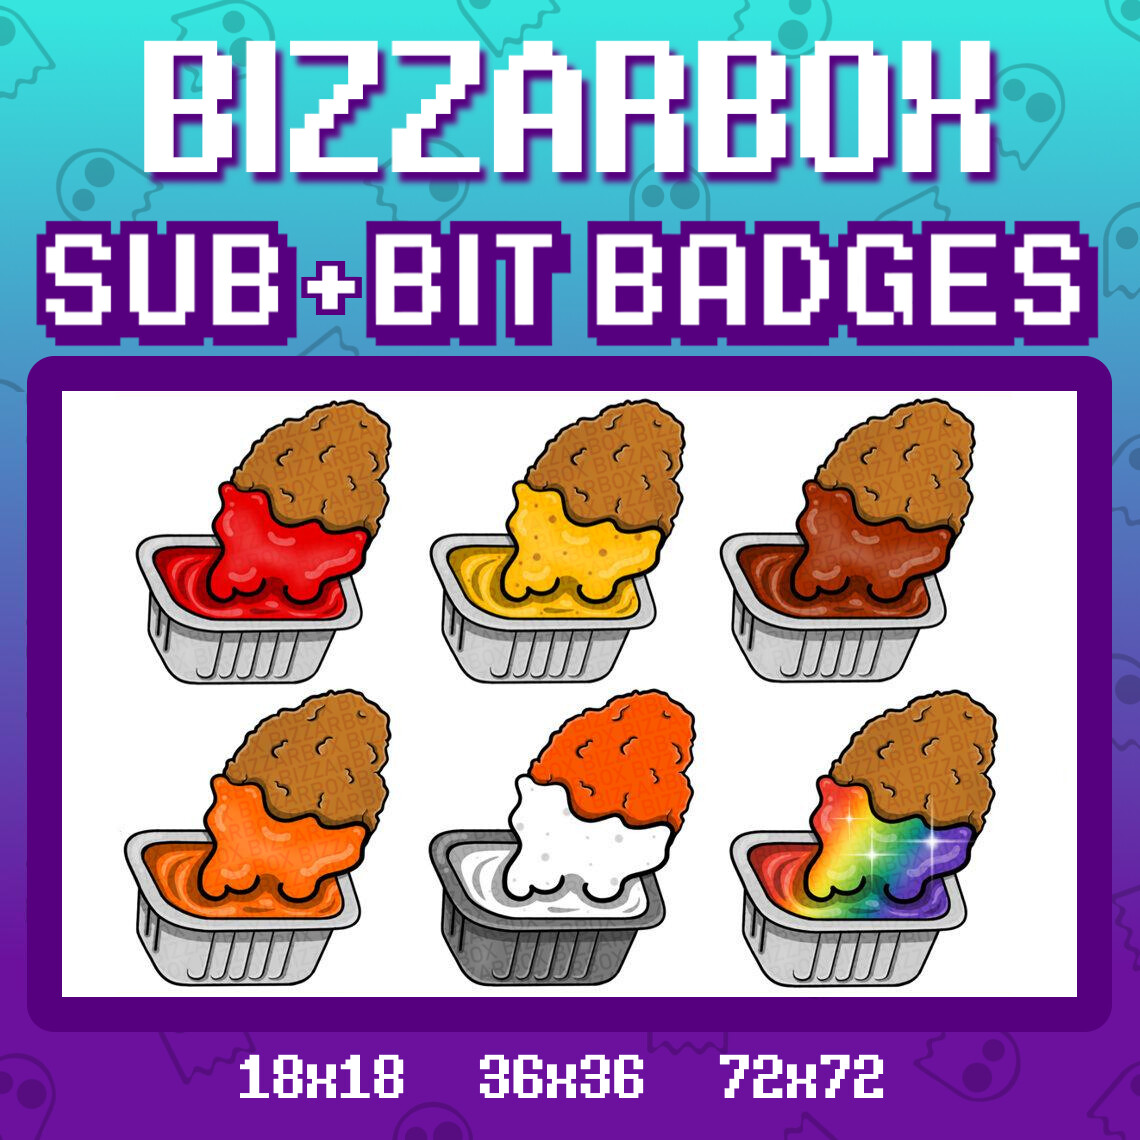 ArtStation - Twitch Sub Badges: Hot Dogs